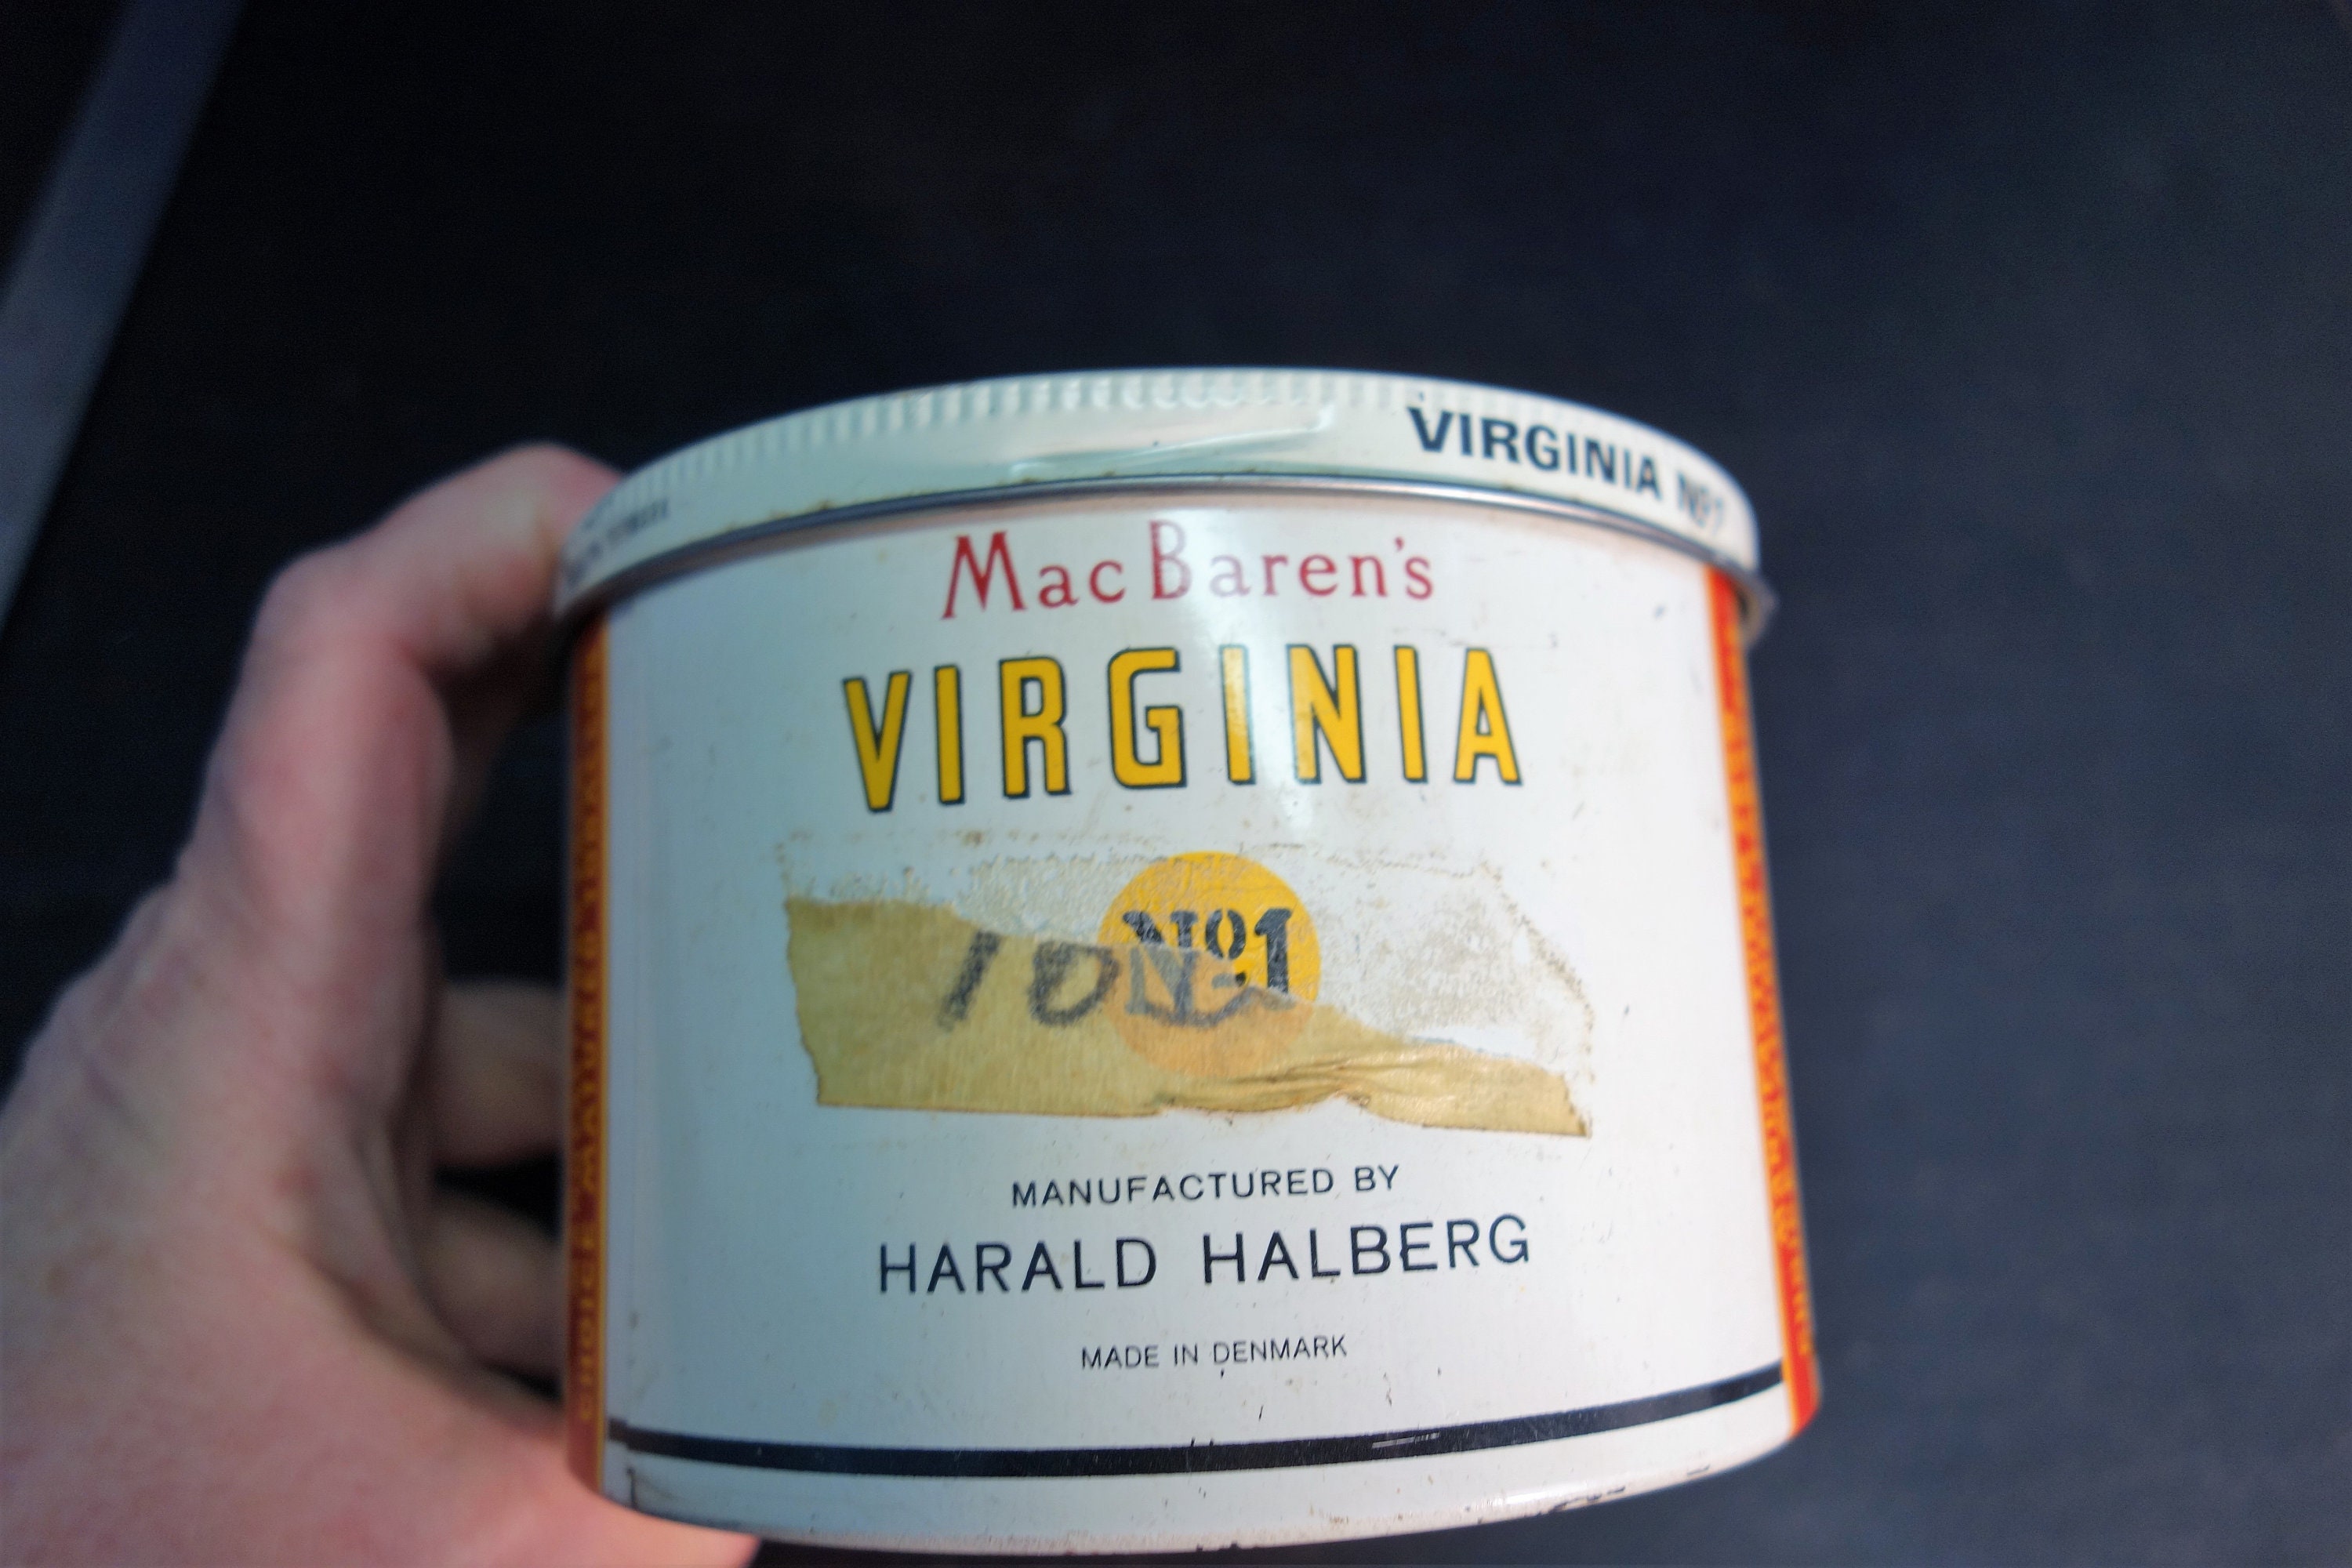 Mac Baren Original Virginia